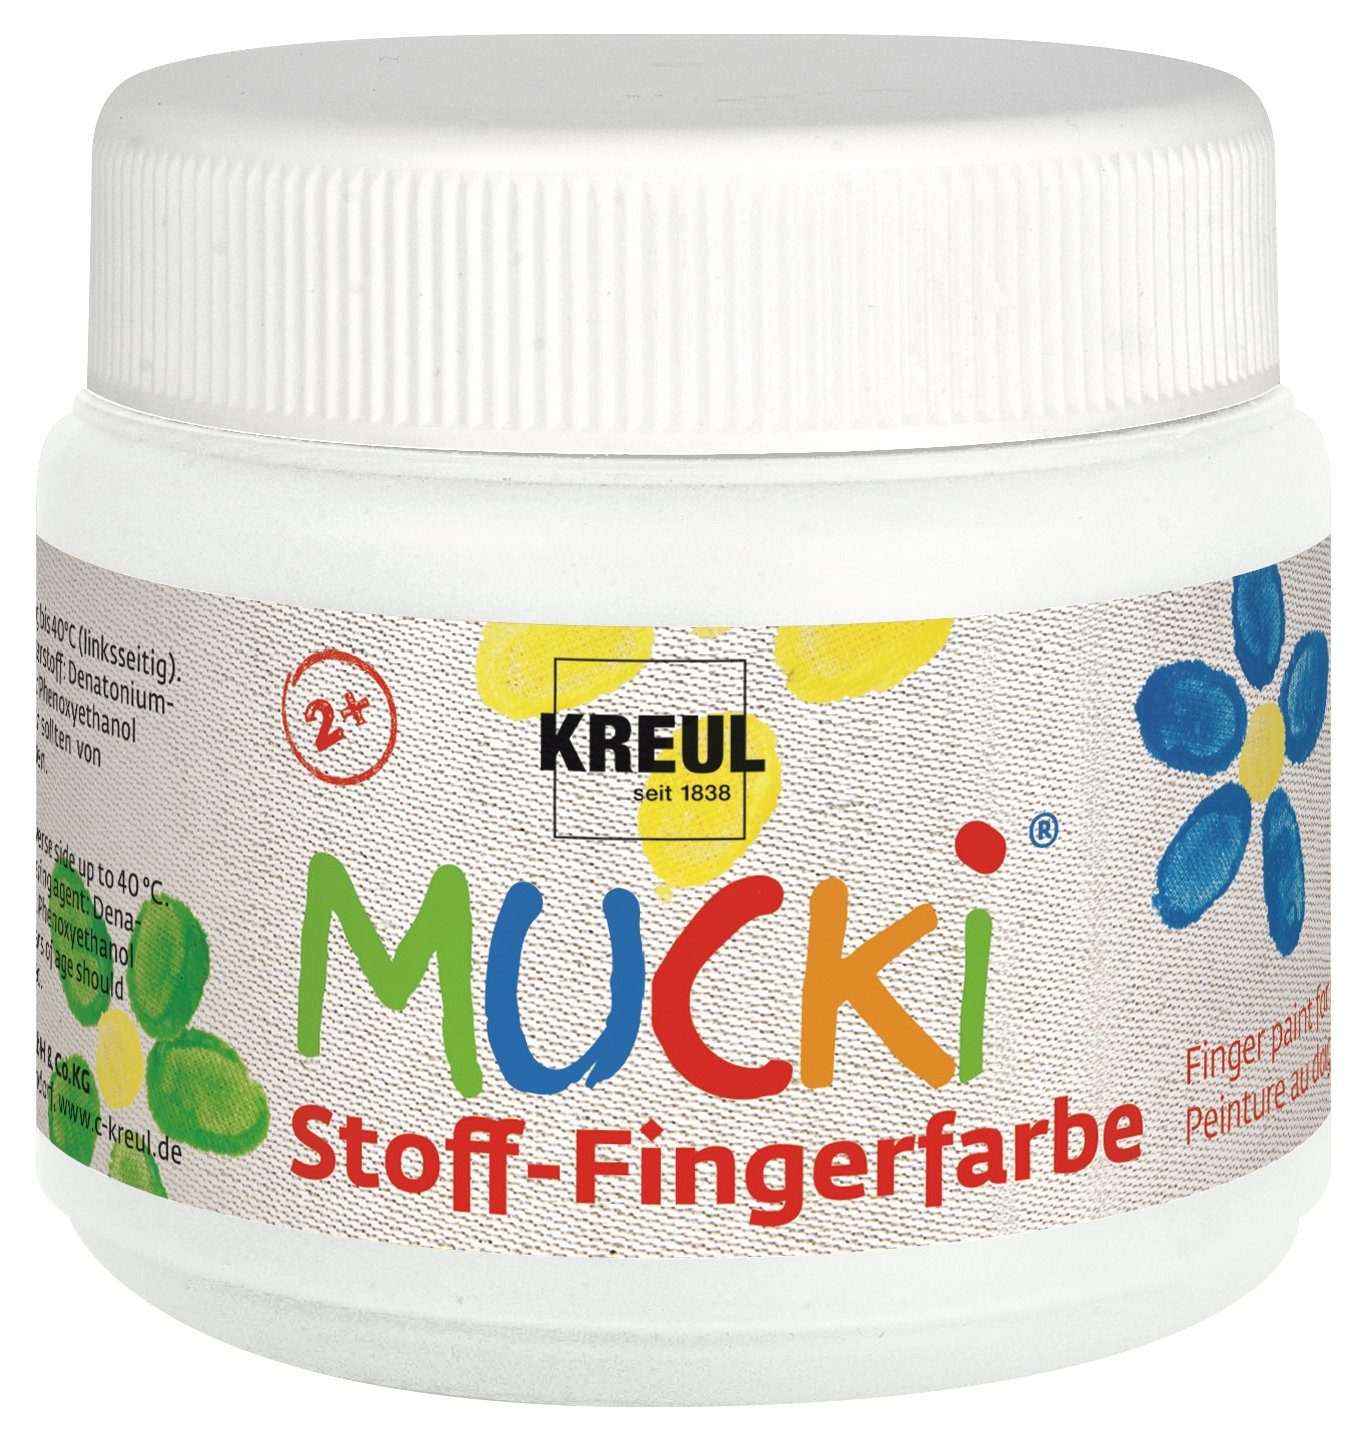 Kreul Fingerfarbe MUCKI, 150 ml